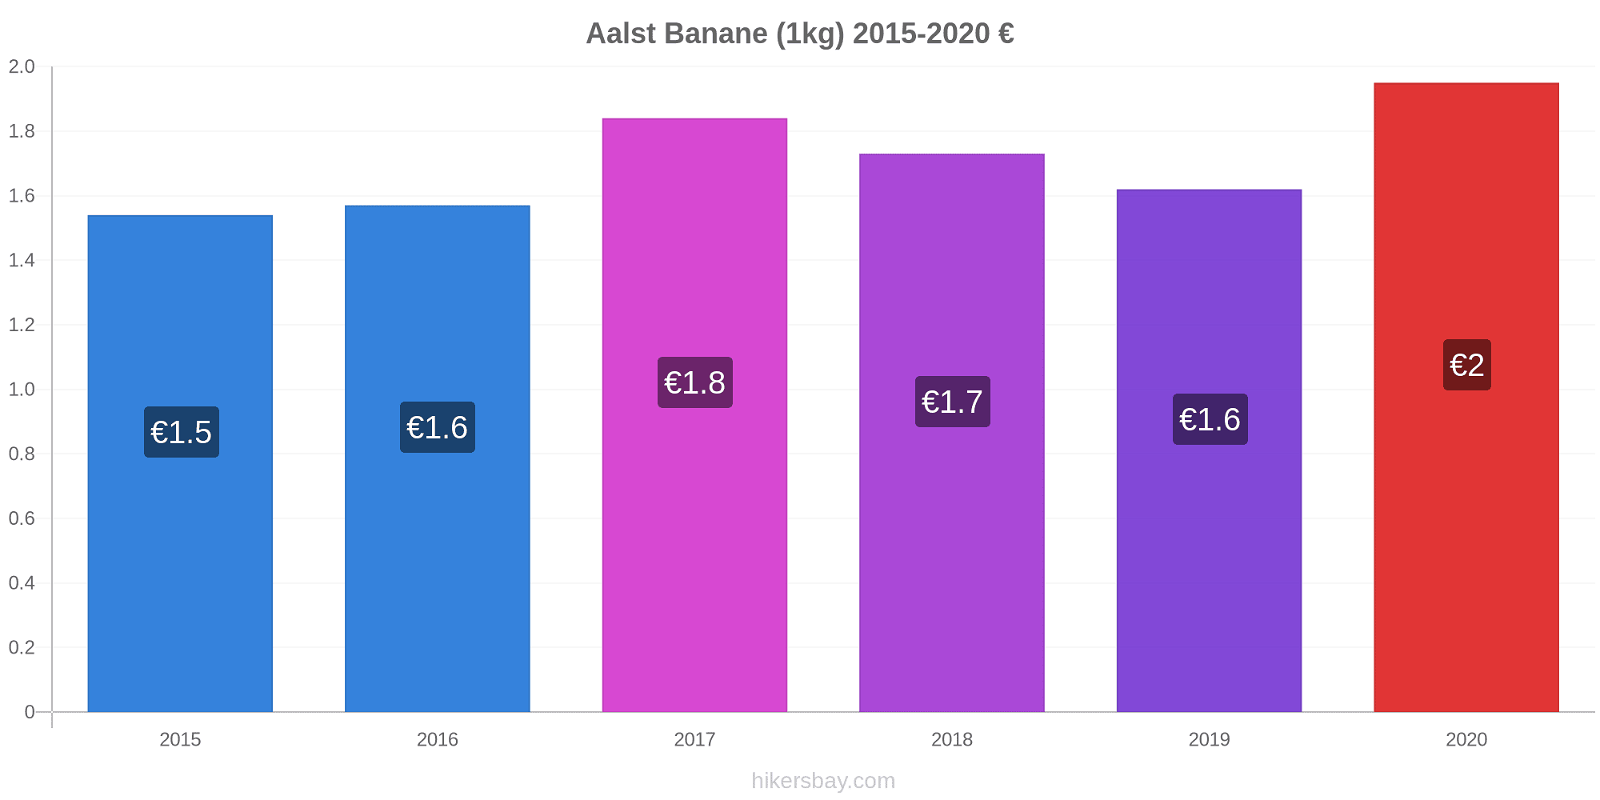 Aalst variazioni di prezzo Banana (1kg) hikersbay.com